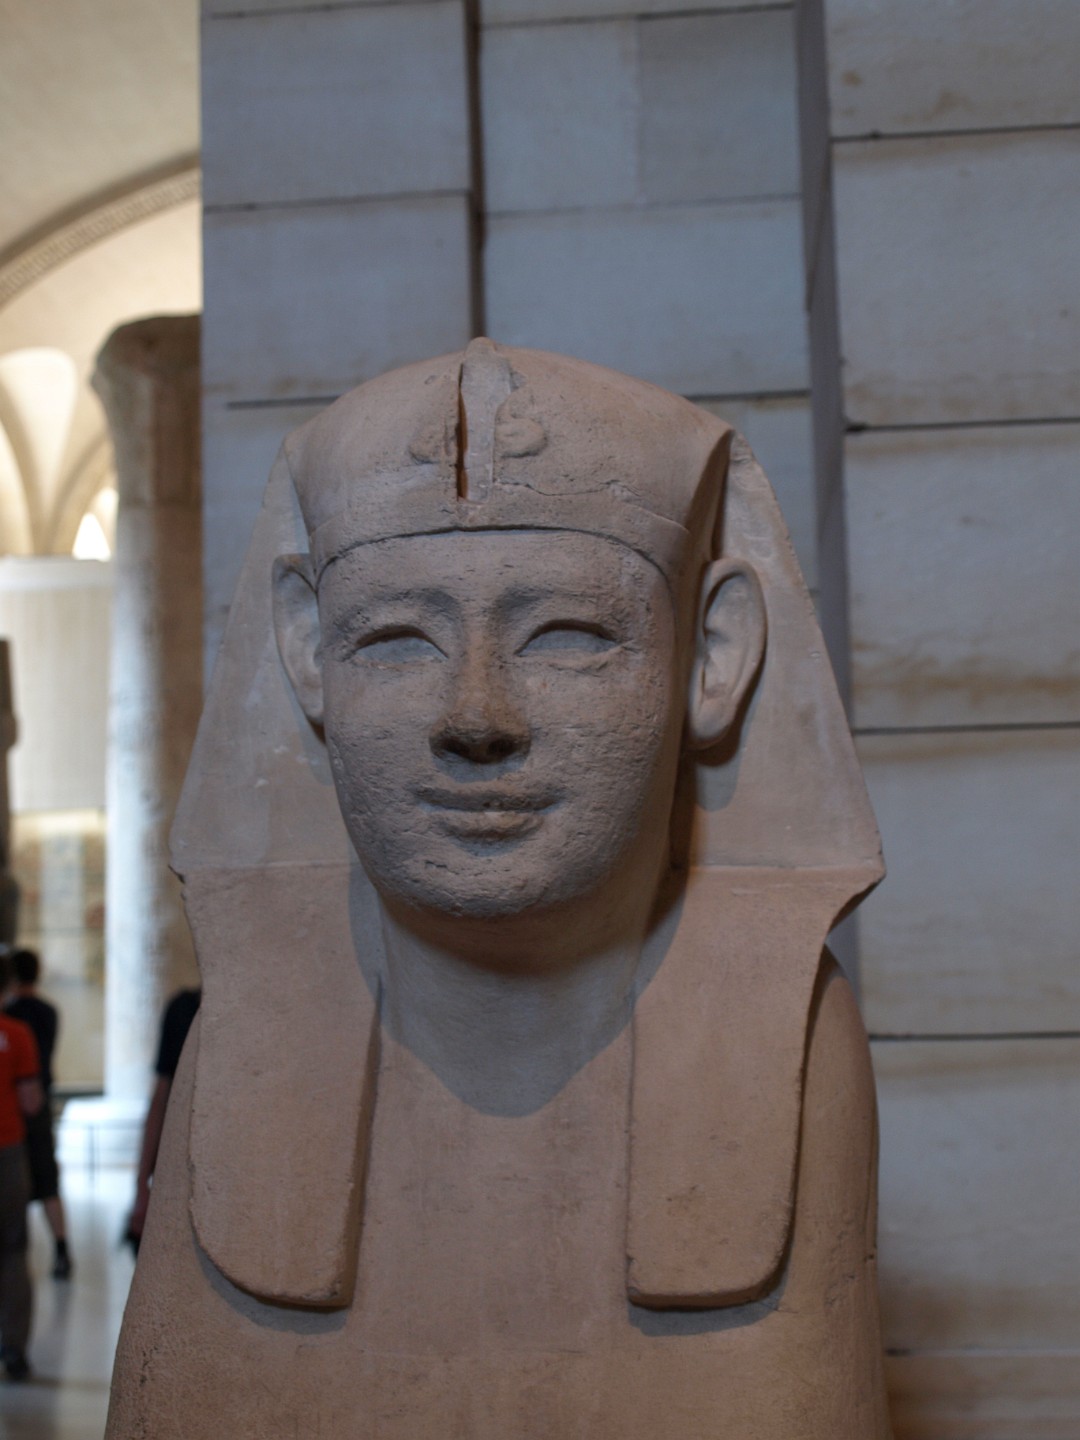 Strange Smile on the Sphinxes